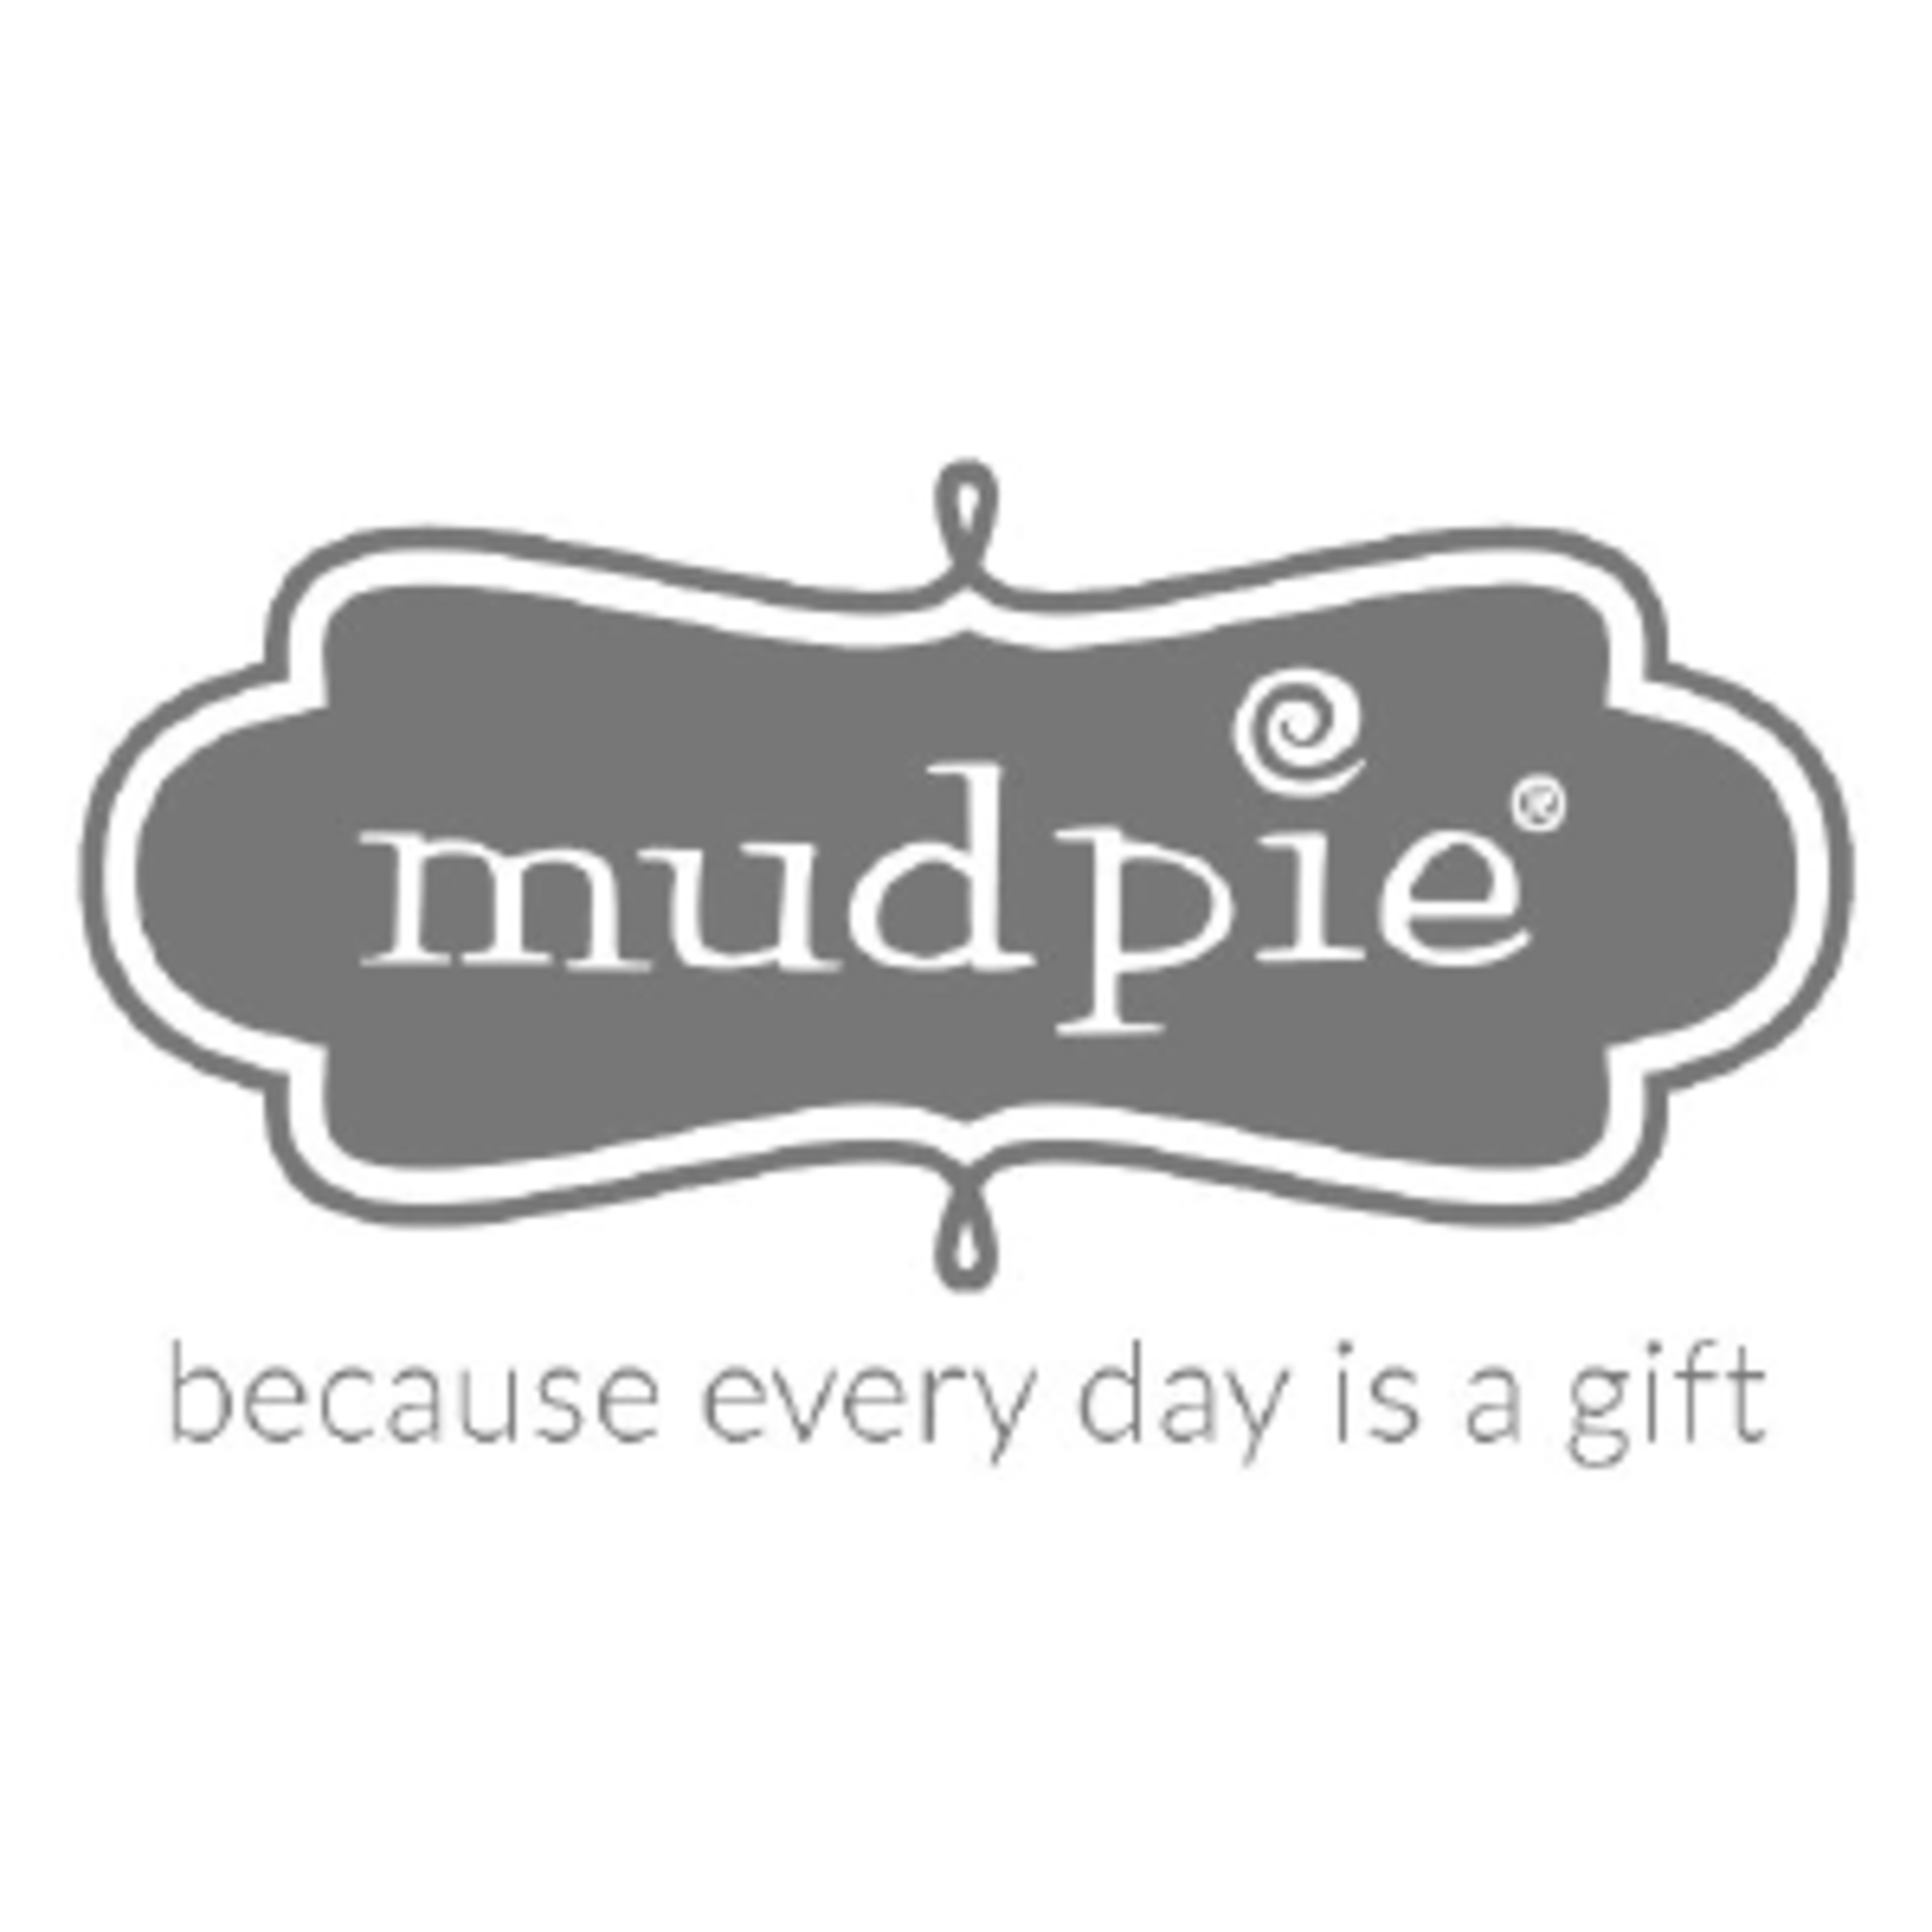 Mudpie Code